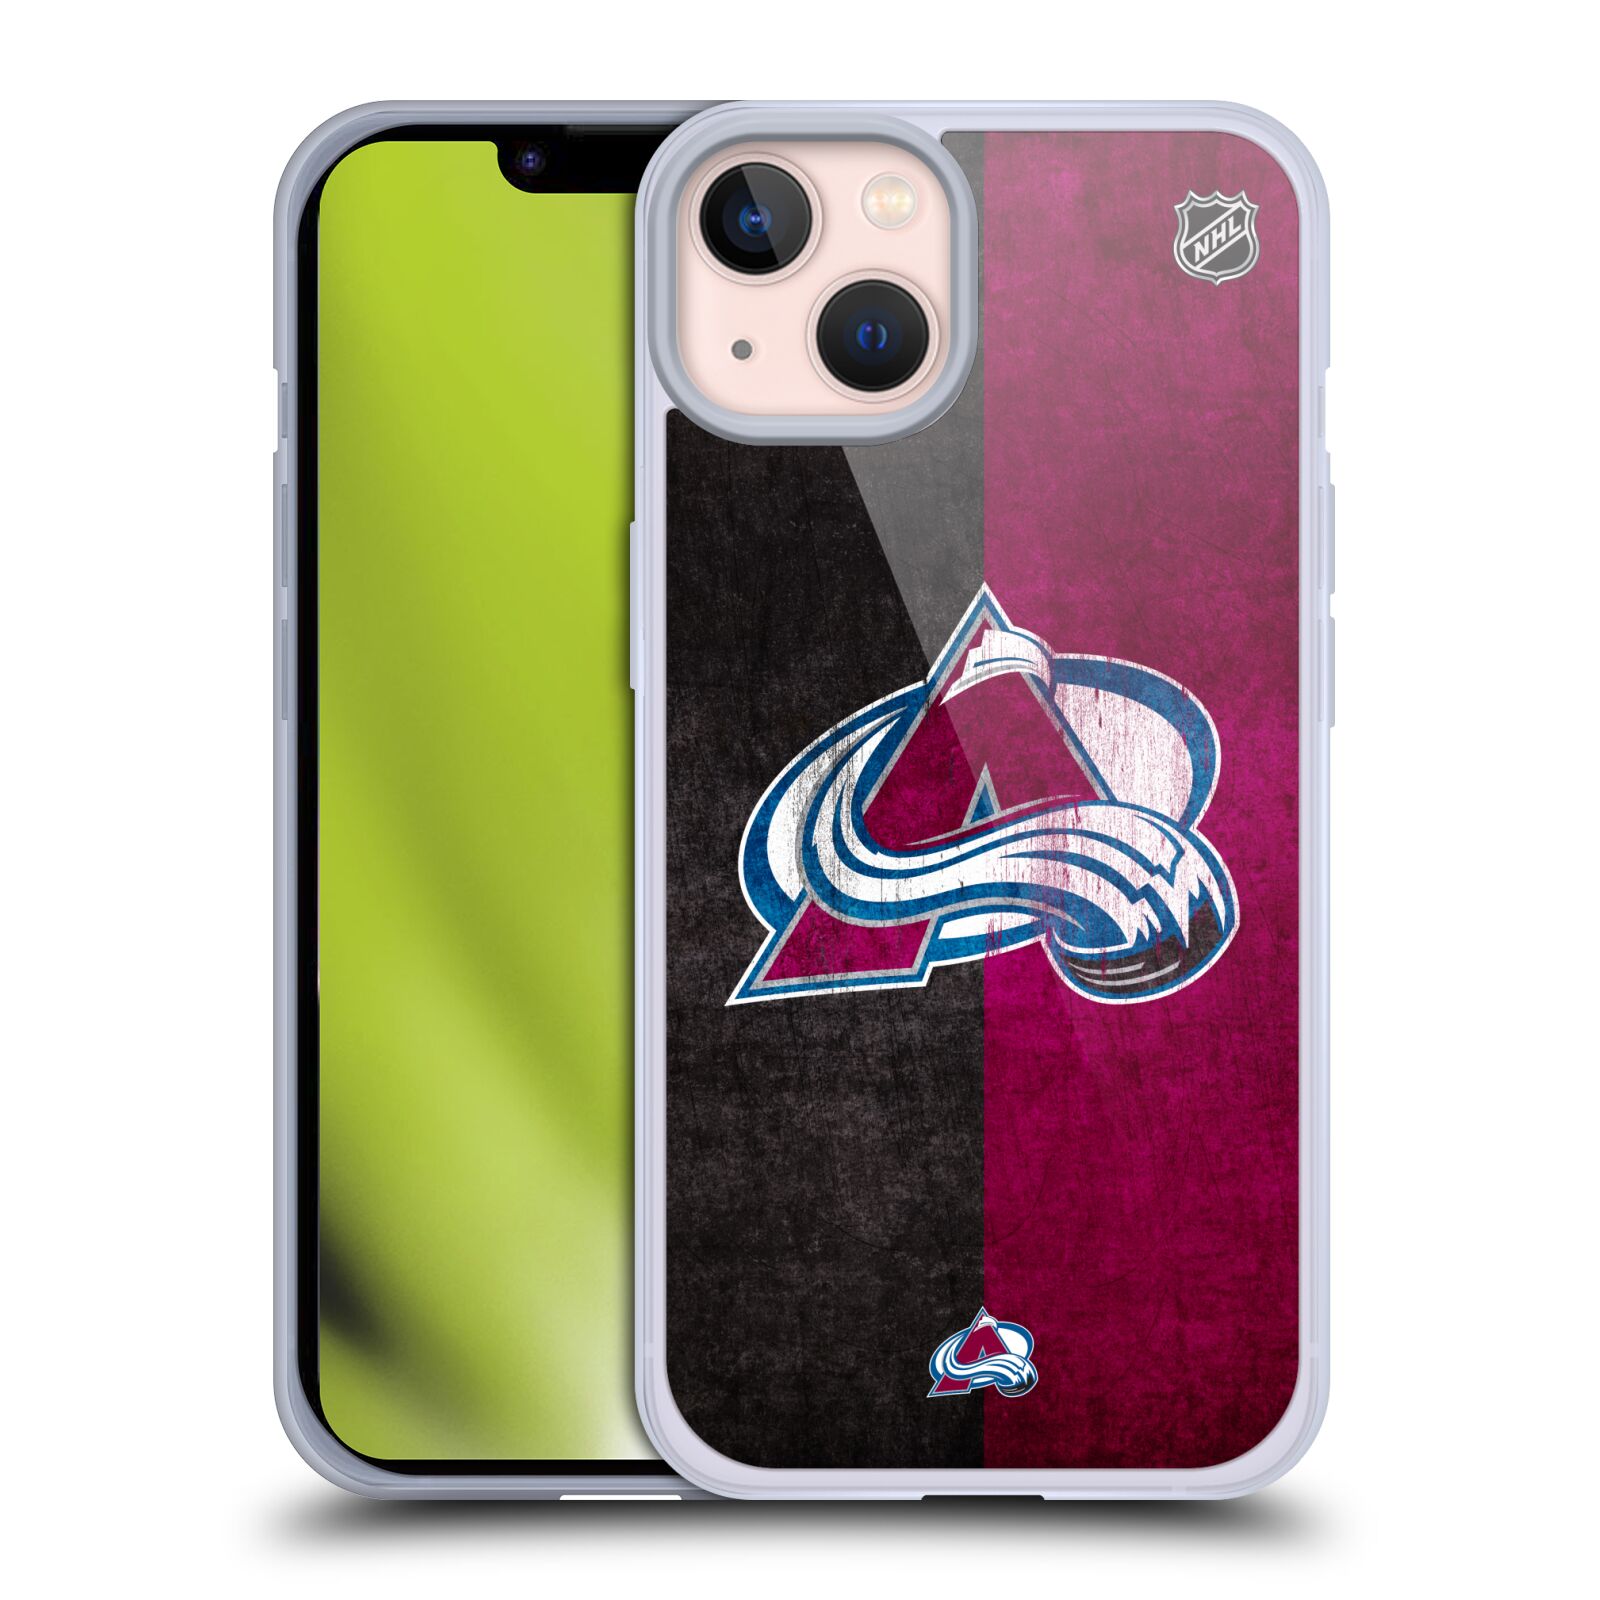 Silikonové pouzdro na mobil Apple iPhone 13 - NHL - Půlené logo Colorado Avalanche (Silikonový kryt, obal, pouzdro na mobilní telefon Apple iPhone 13 s licencovaným motivem NHL - Půlené logo Colorado Avalanche)